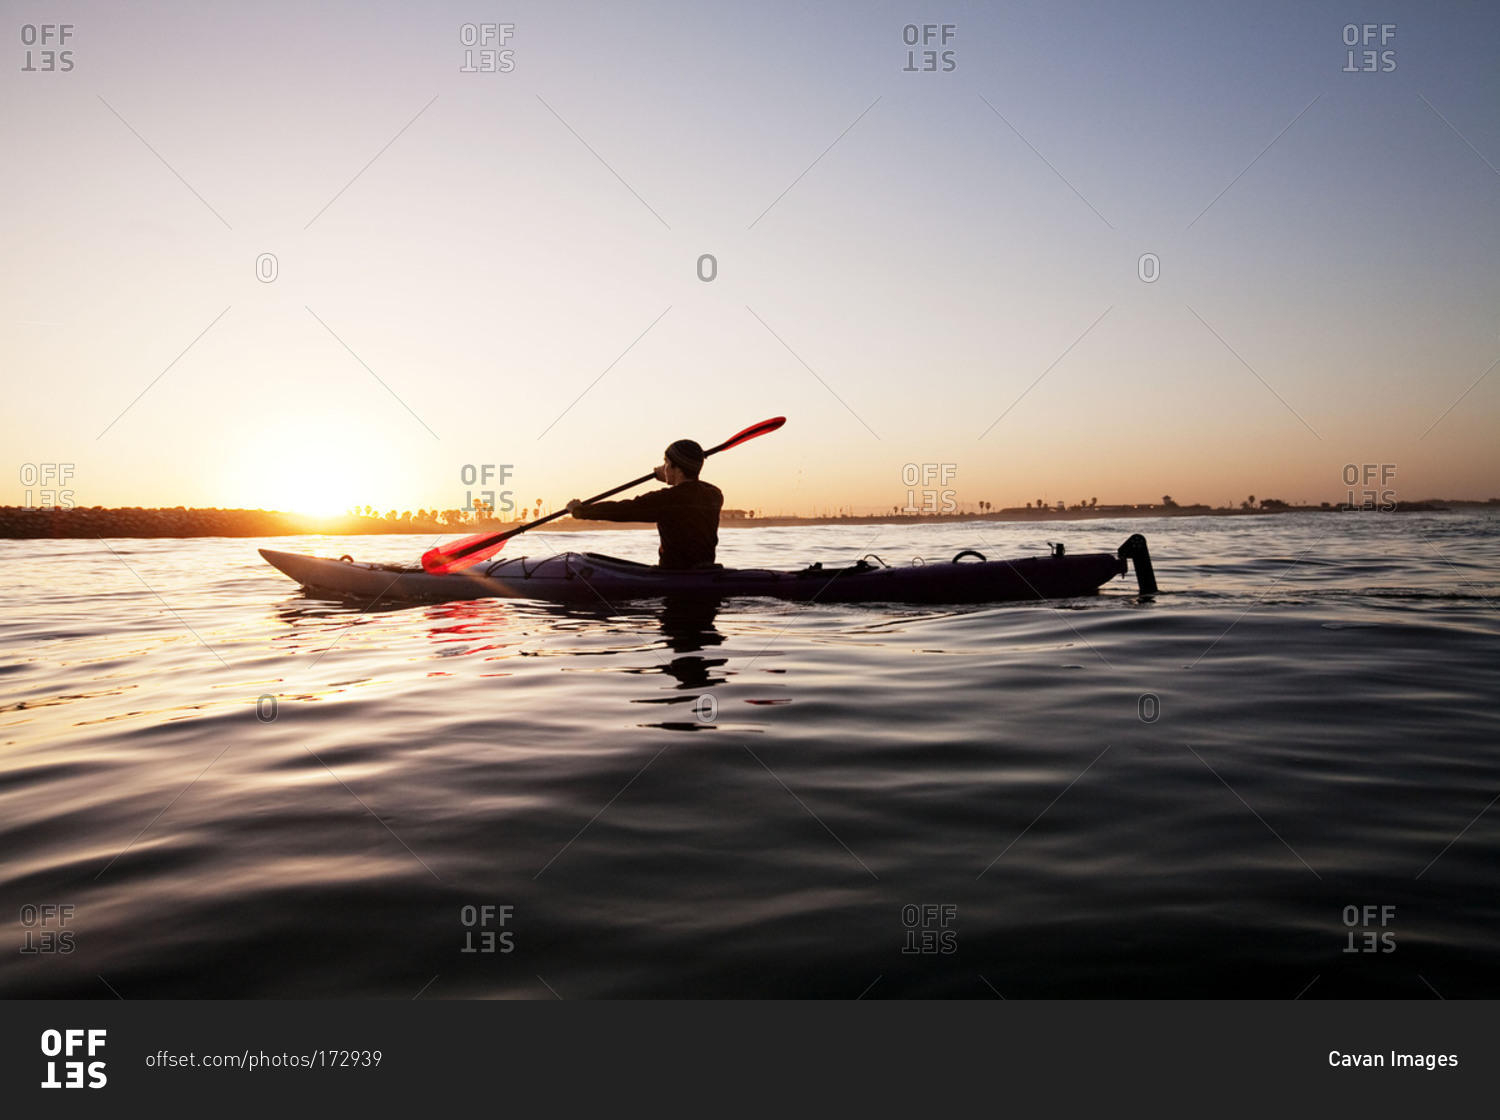 A man paddling a kayak by himself